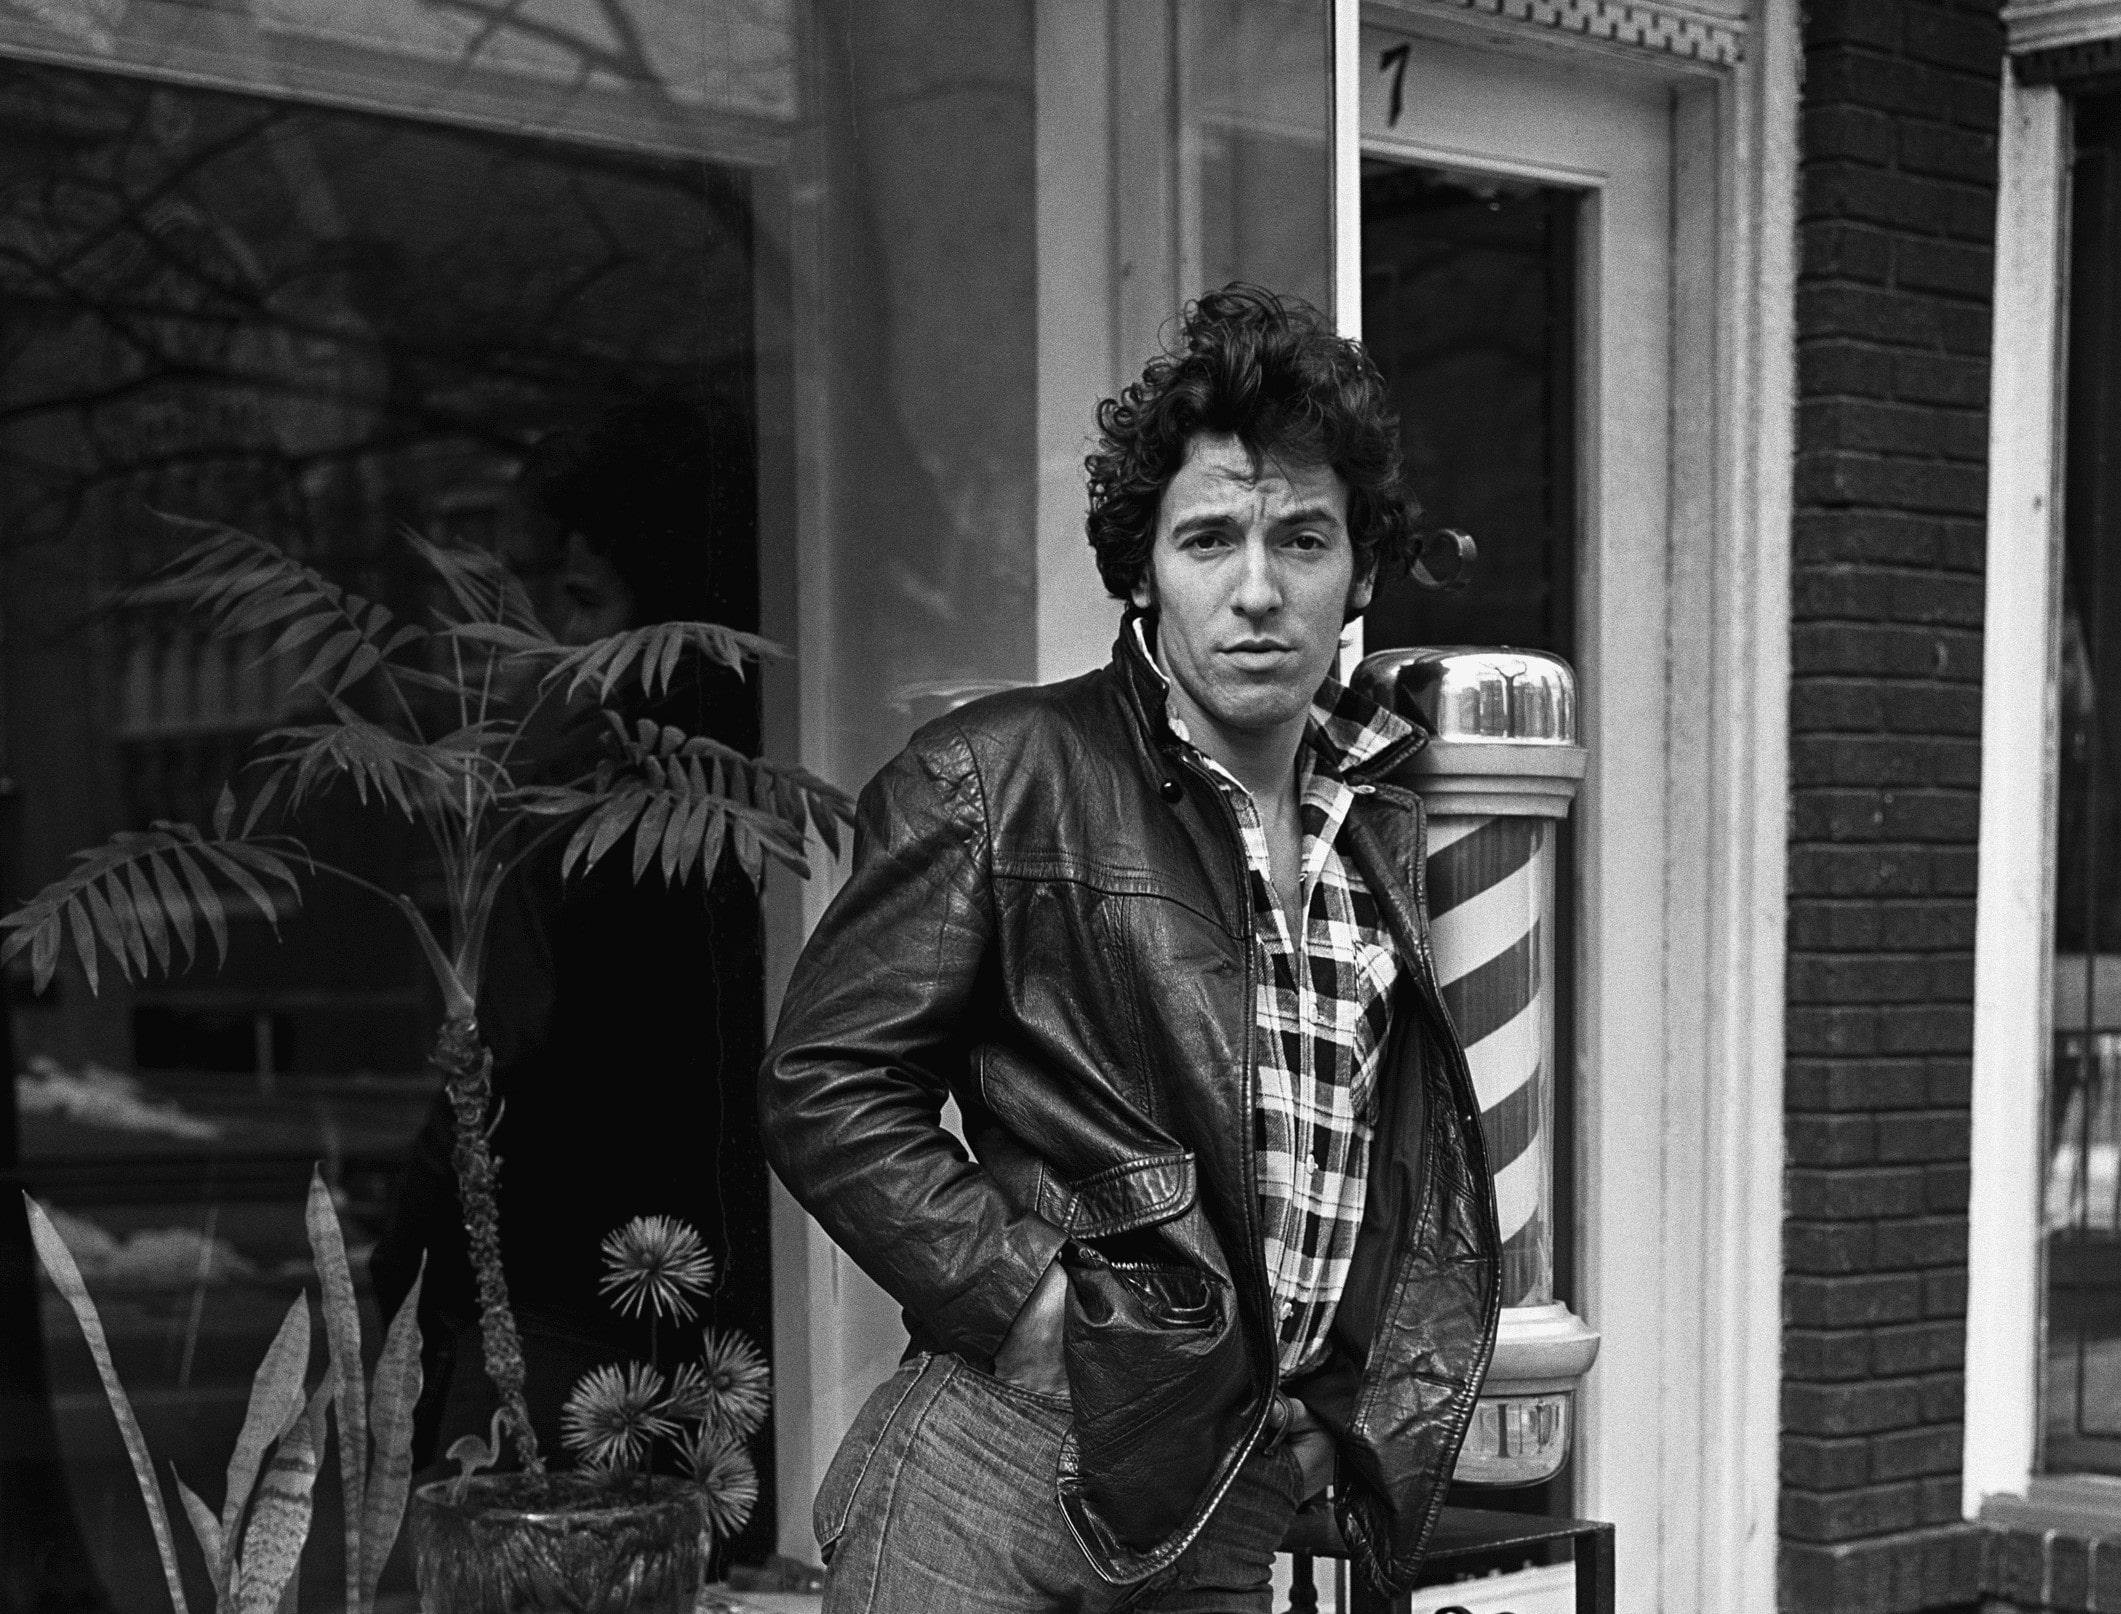 Springsteen: His Hometown, A Historical Exhibit (October 2019-December 2019)